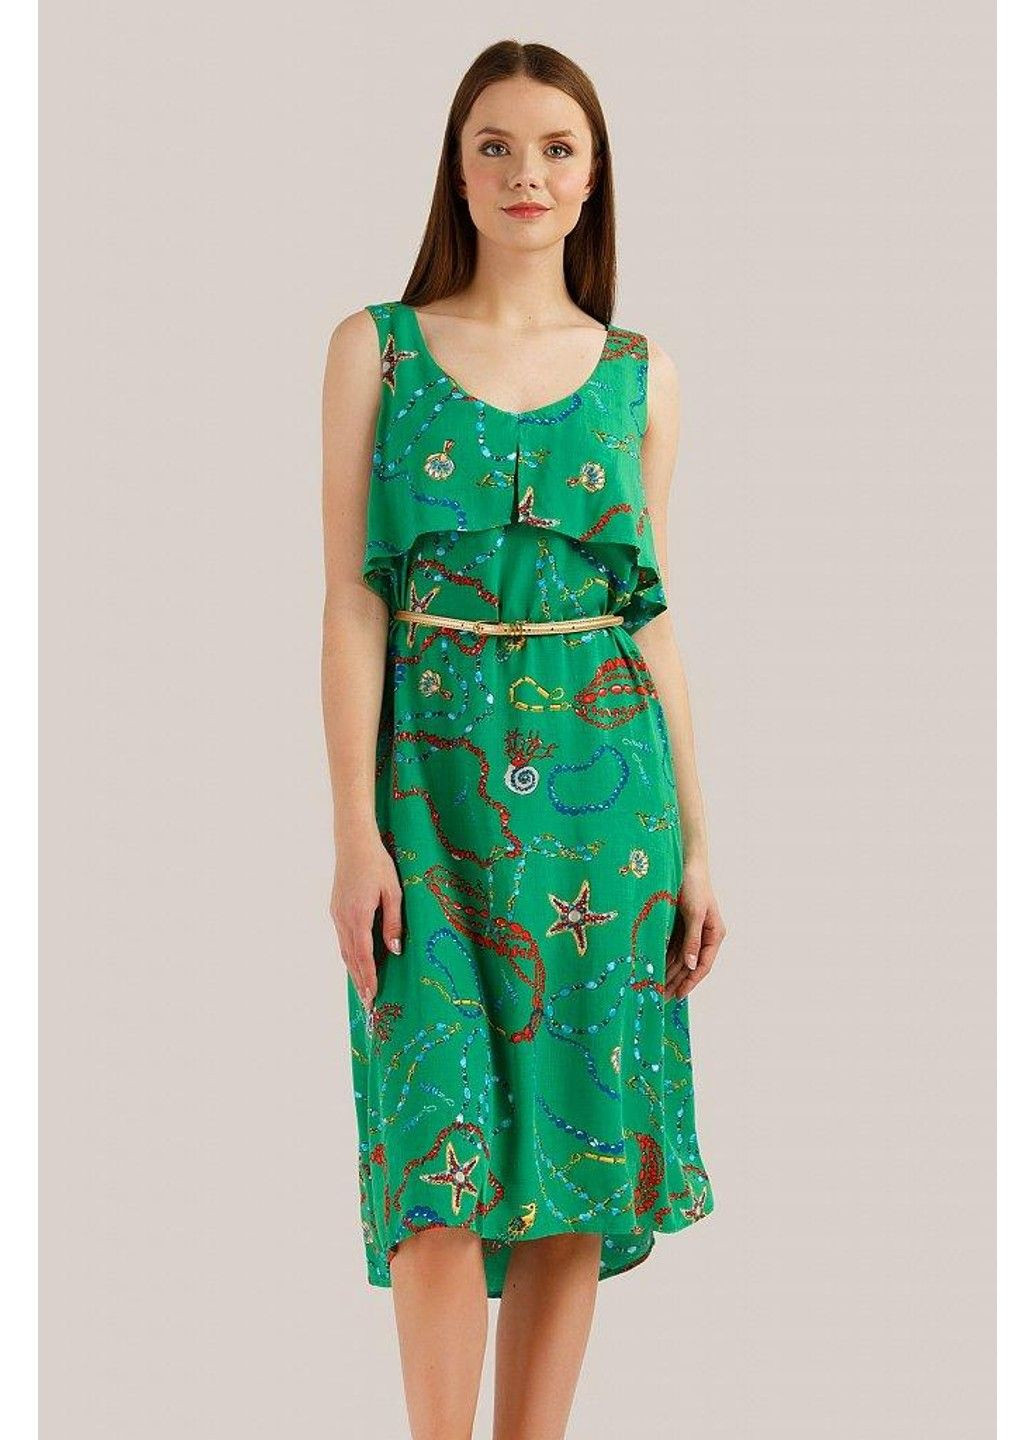 Зеленое кэжуал платье s19-14033-500 а-силуэт Finn Flare с рисунком